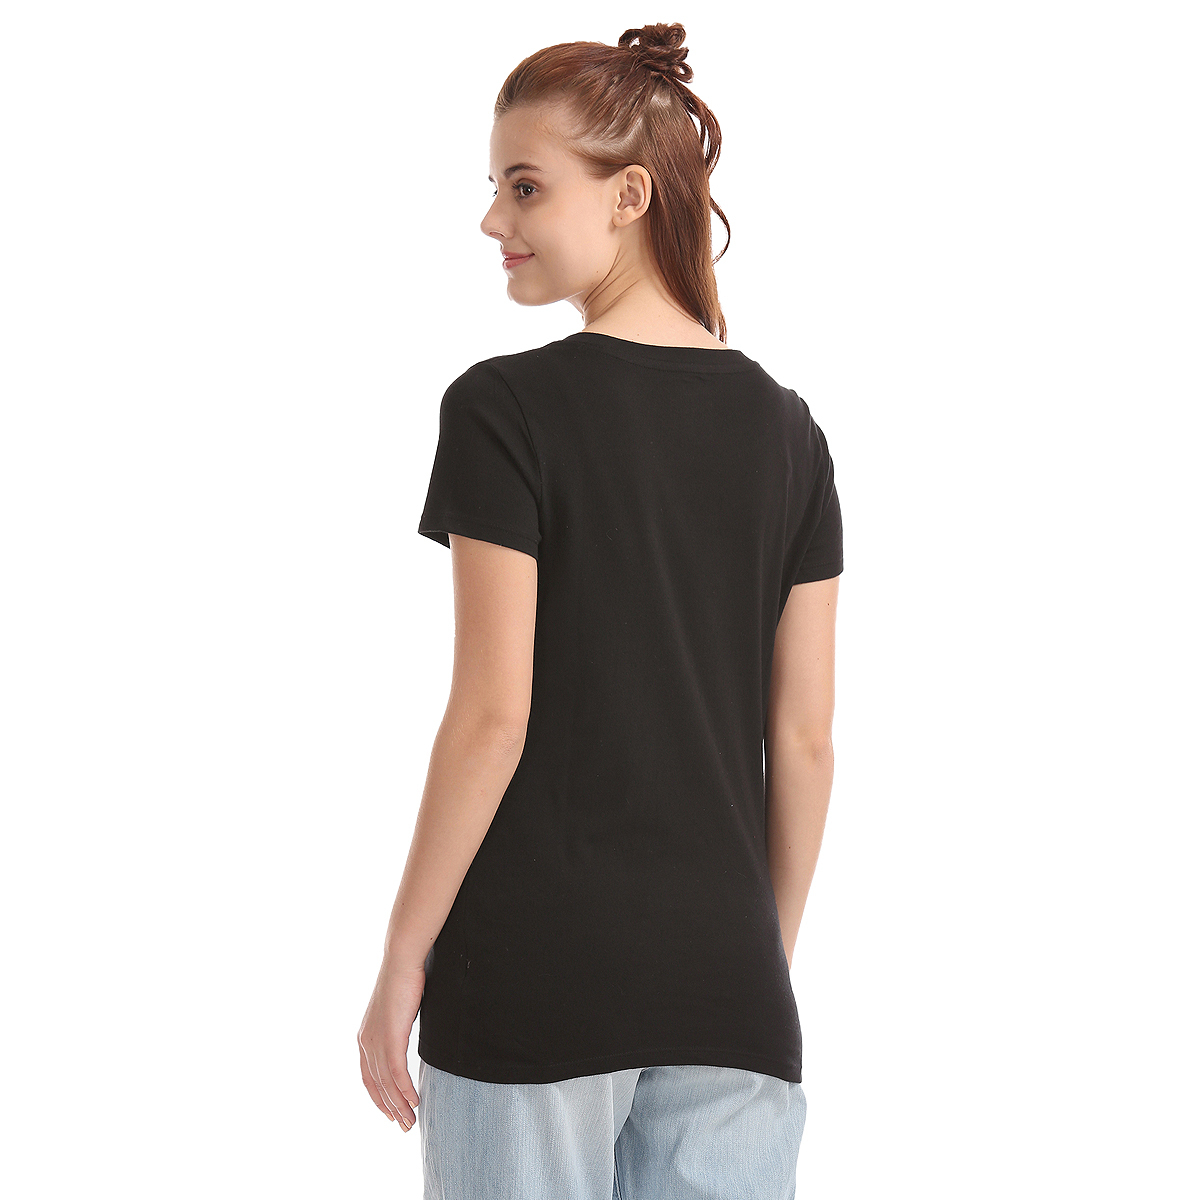 Gap Solid Color Regular Fit Round Neck T-Shirt Styled with Sequins Embellished Logo - Black